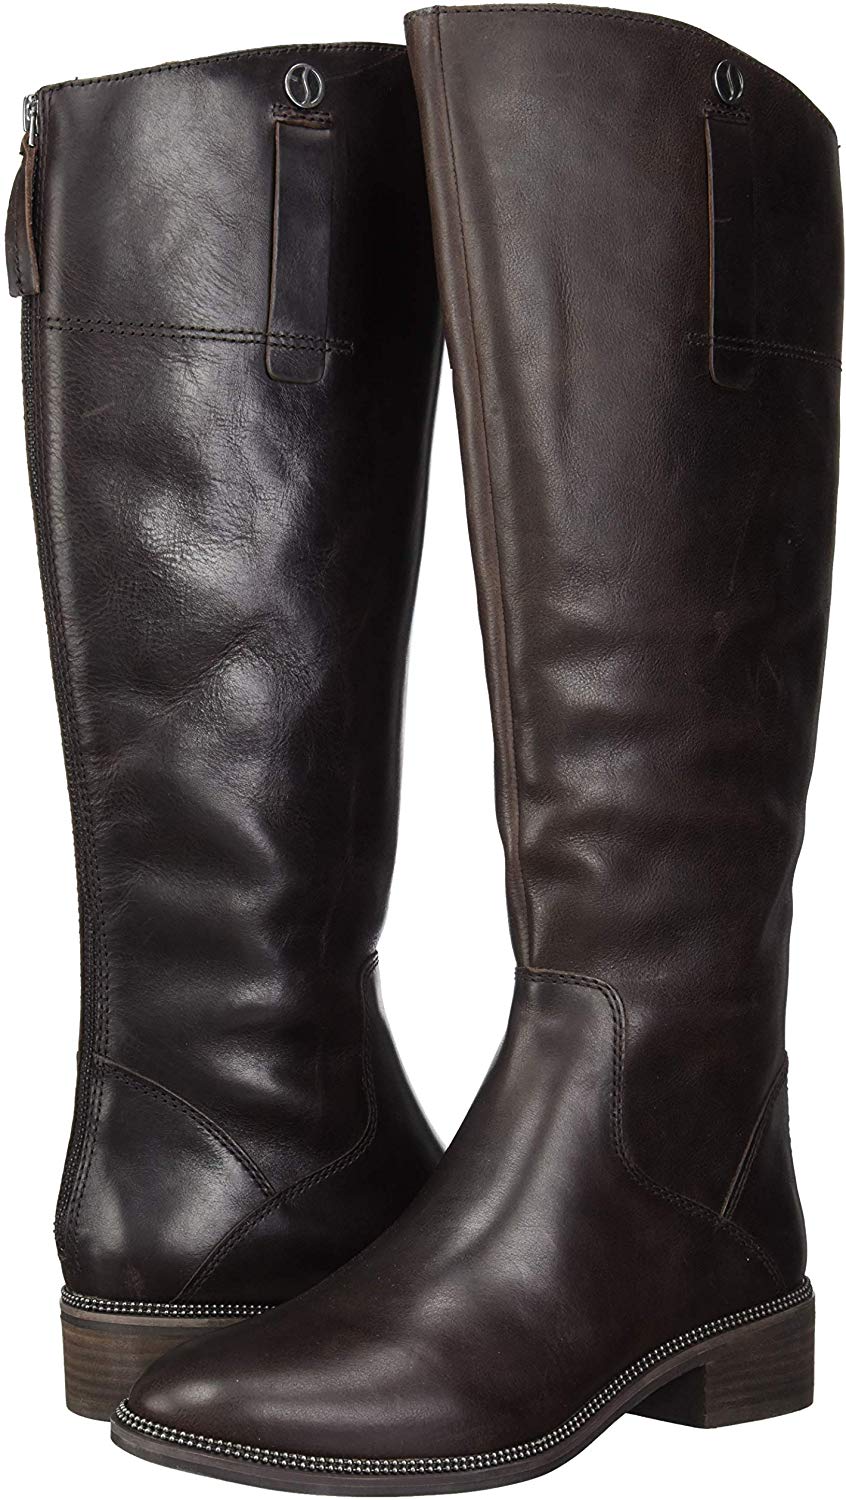 Franco Sarto Women's Becky Knee High Boot, Brown, Size 10.0 jRbz | eBay